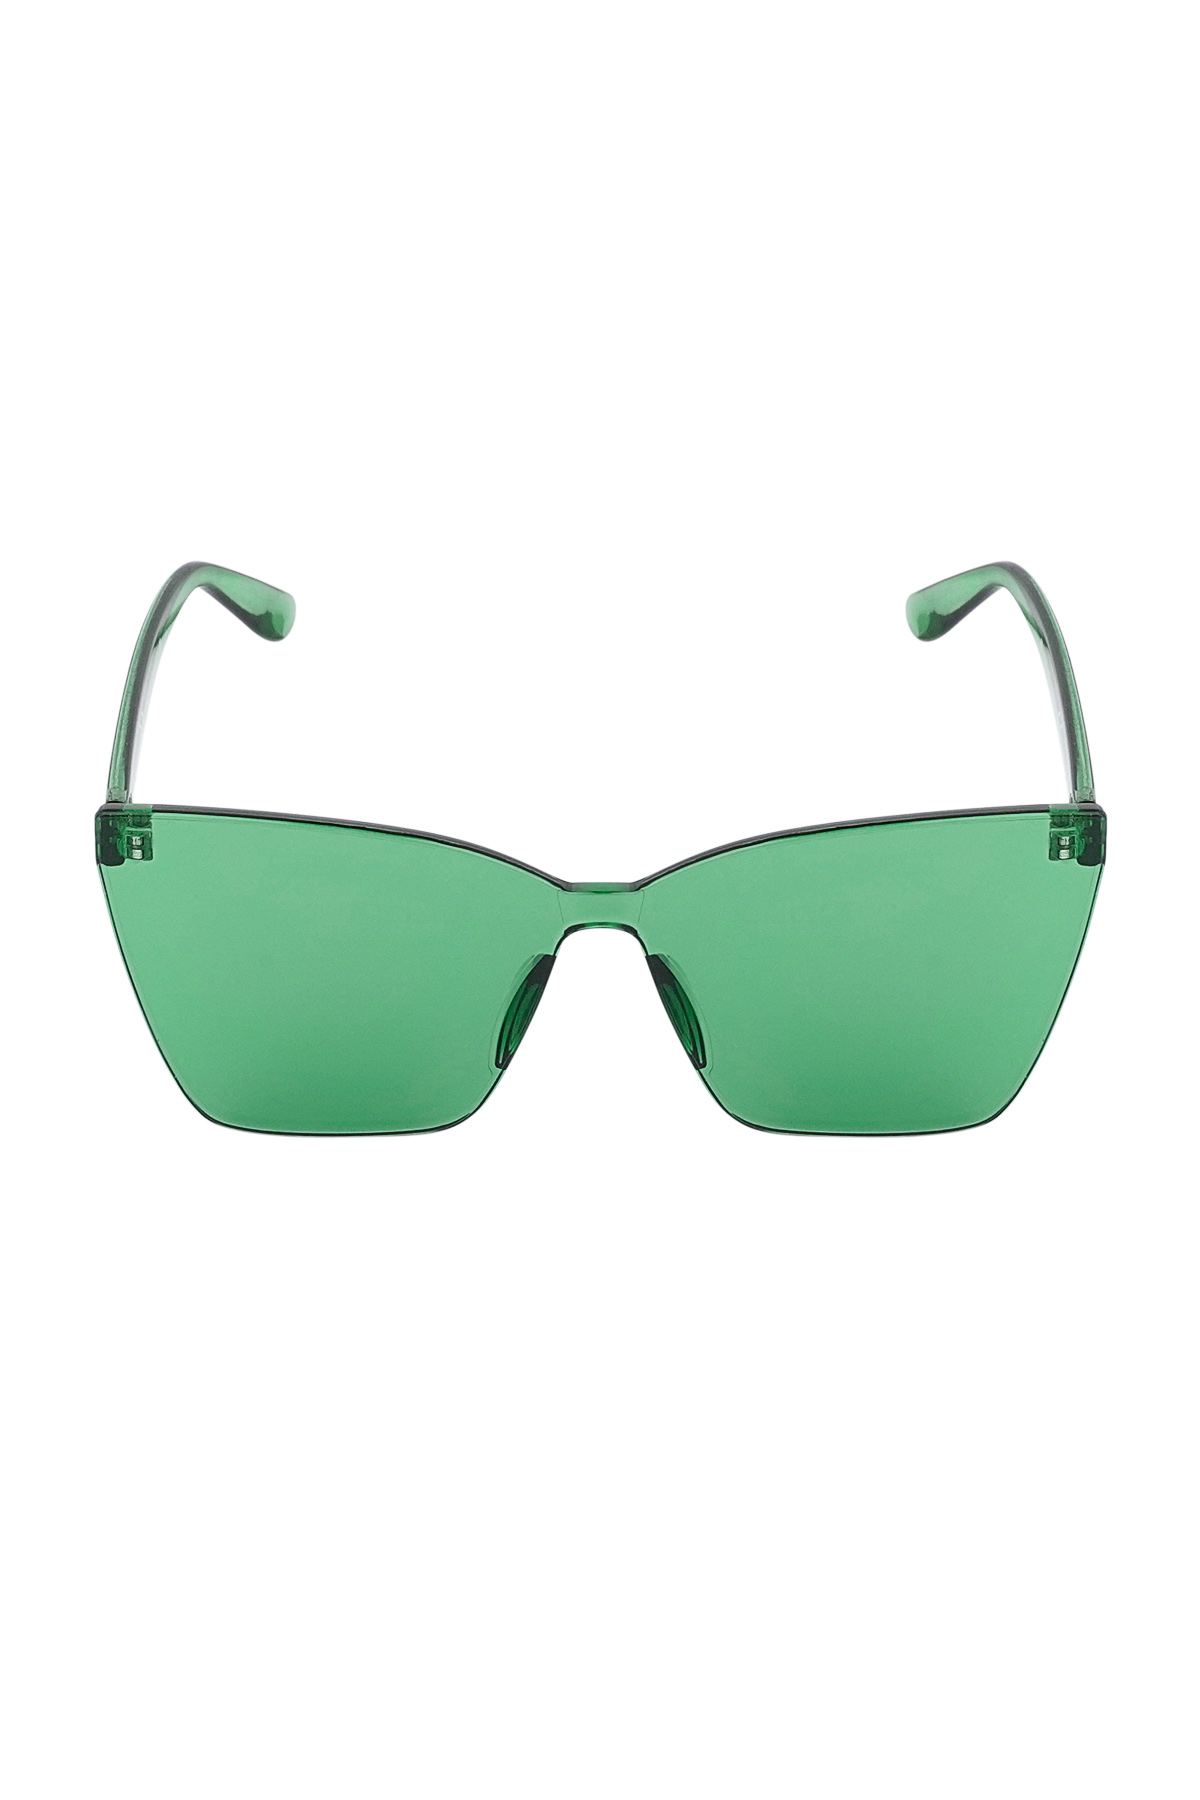 Single-color daily sunglasses - green Picture2